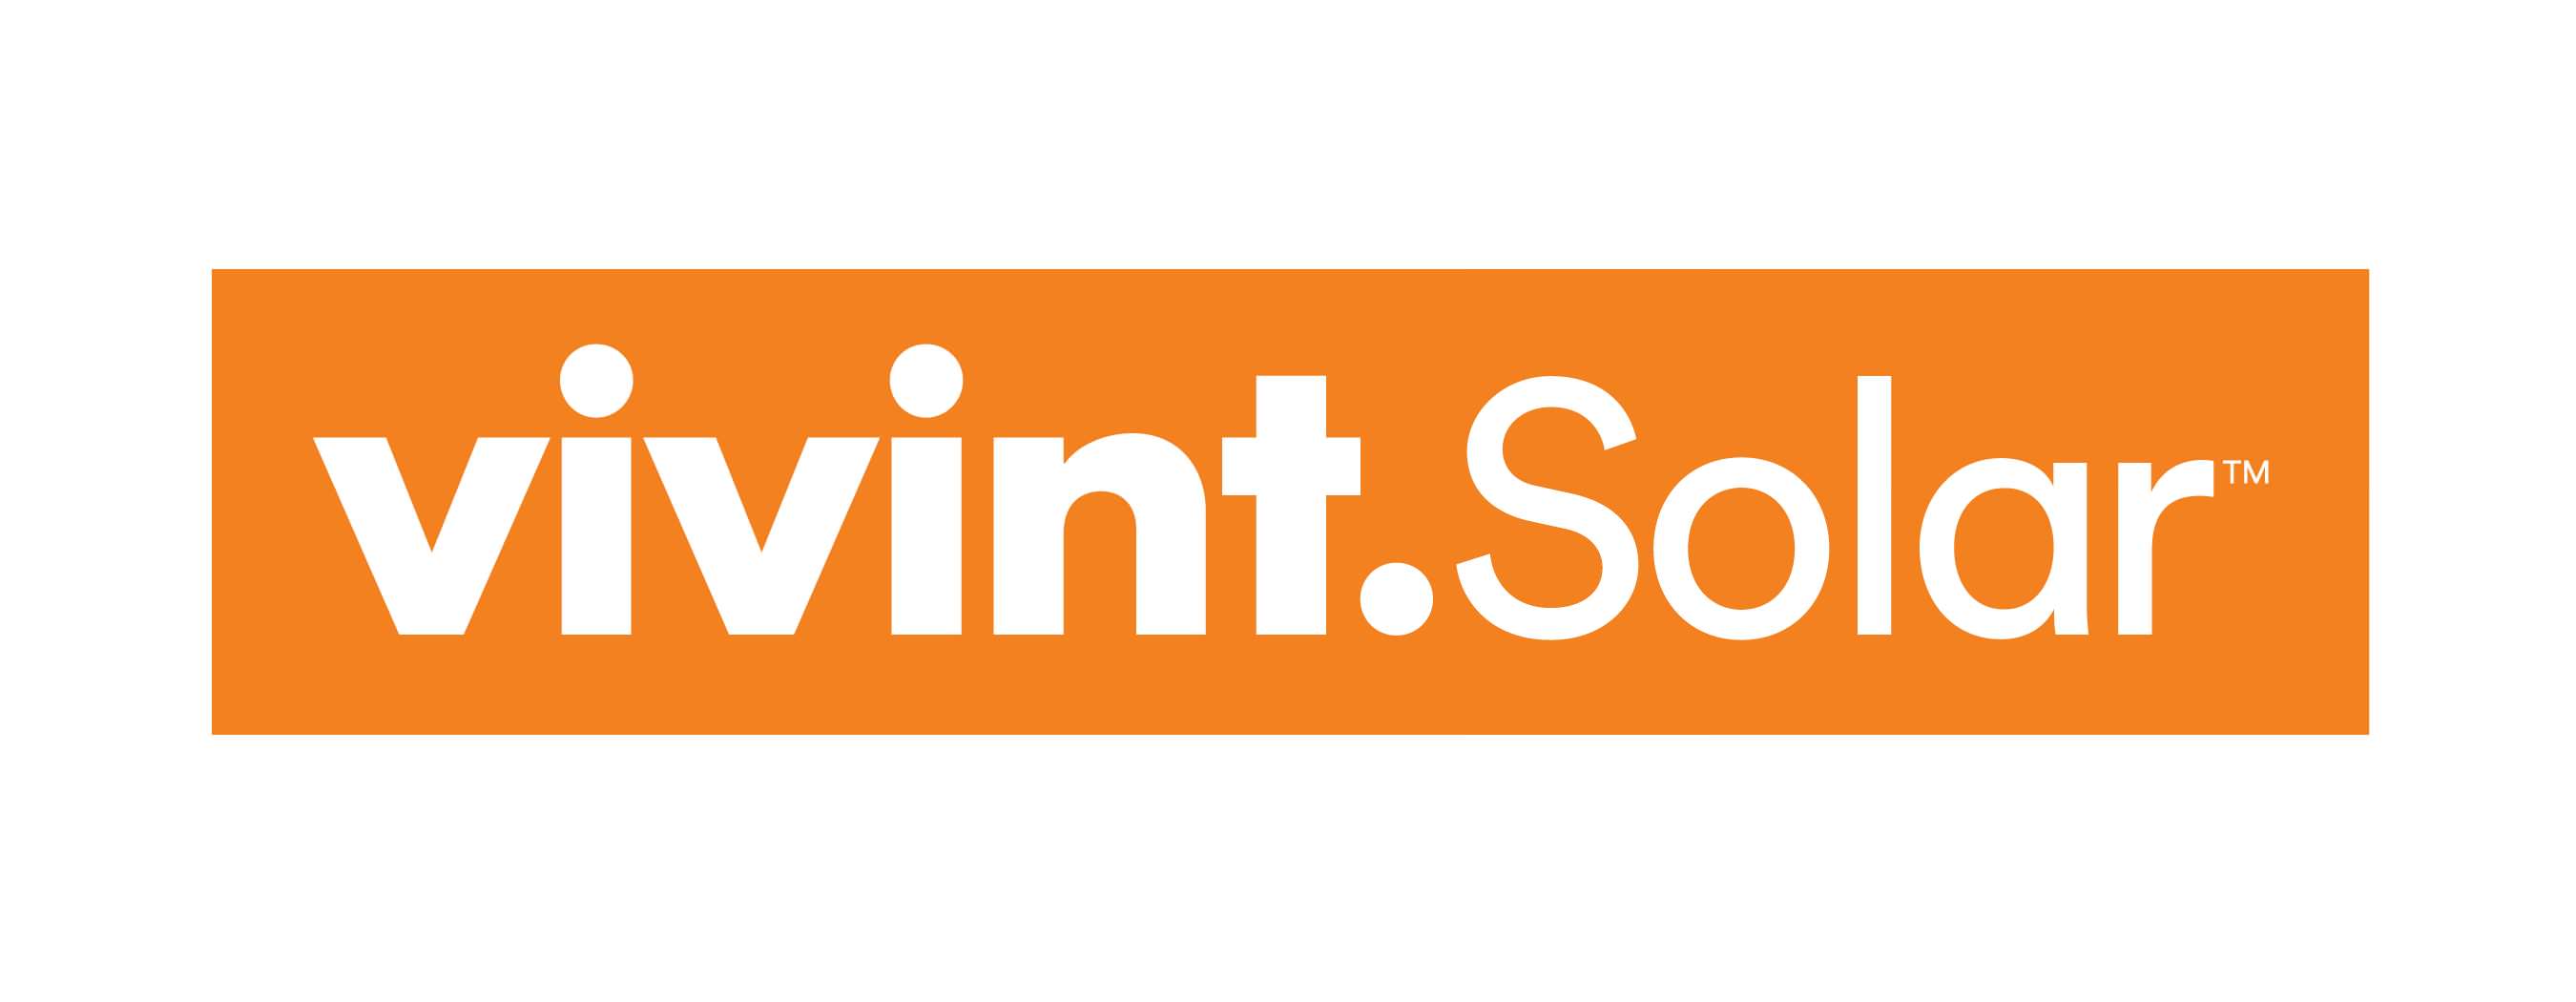 Vivint Logo - Simple & Affordable